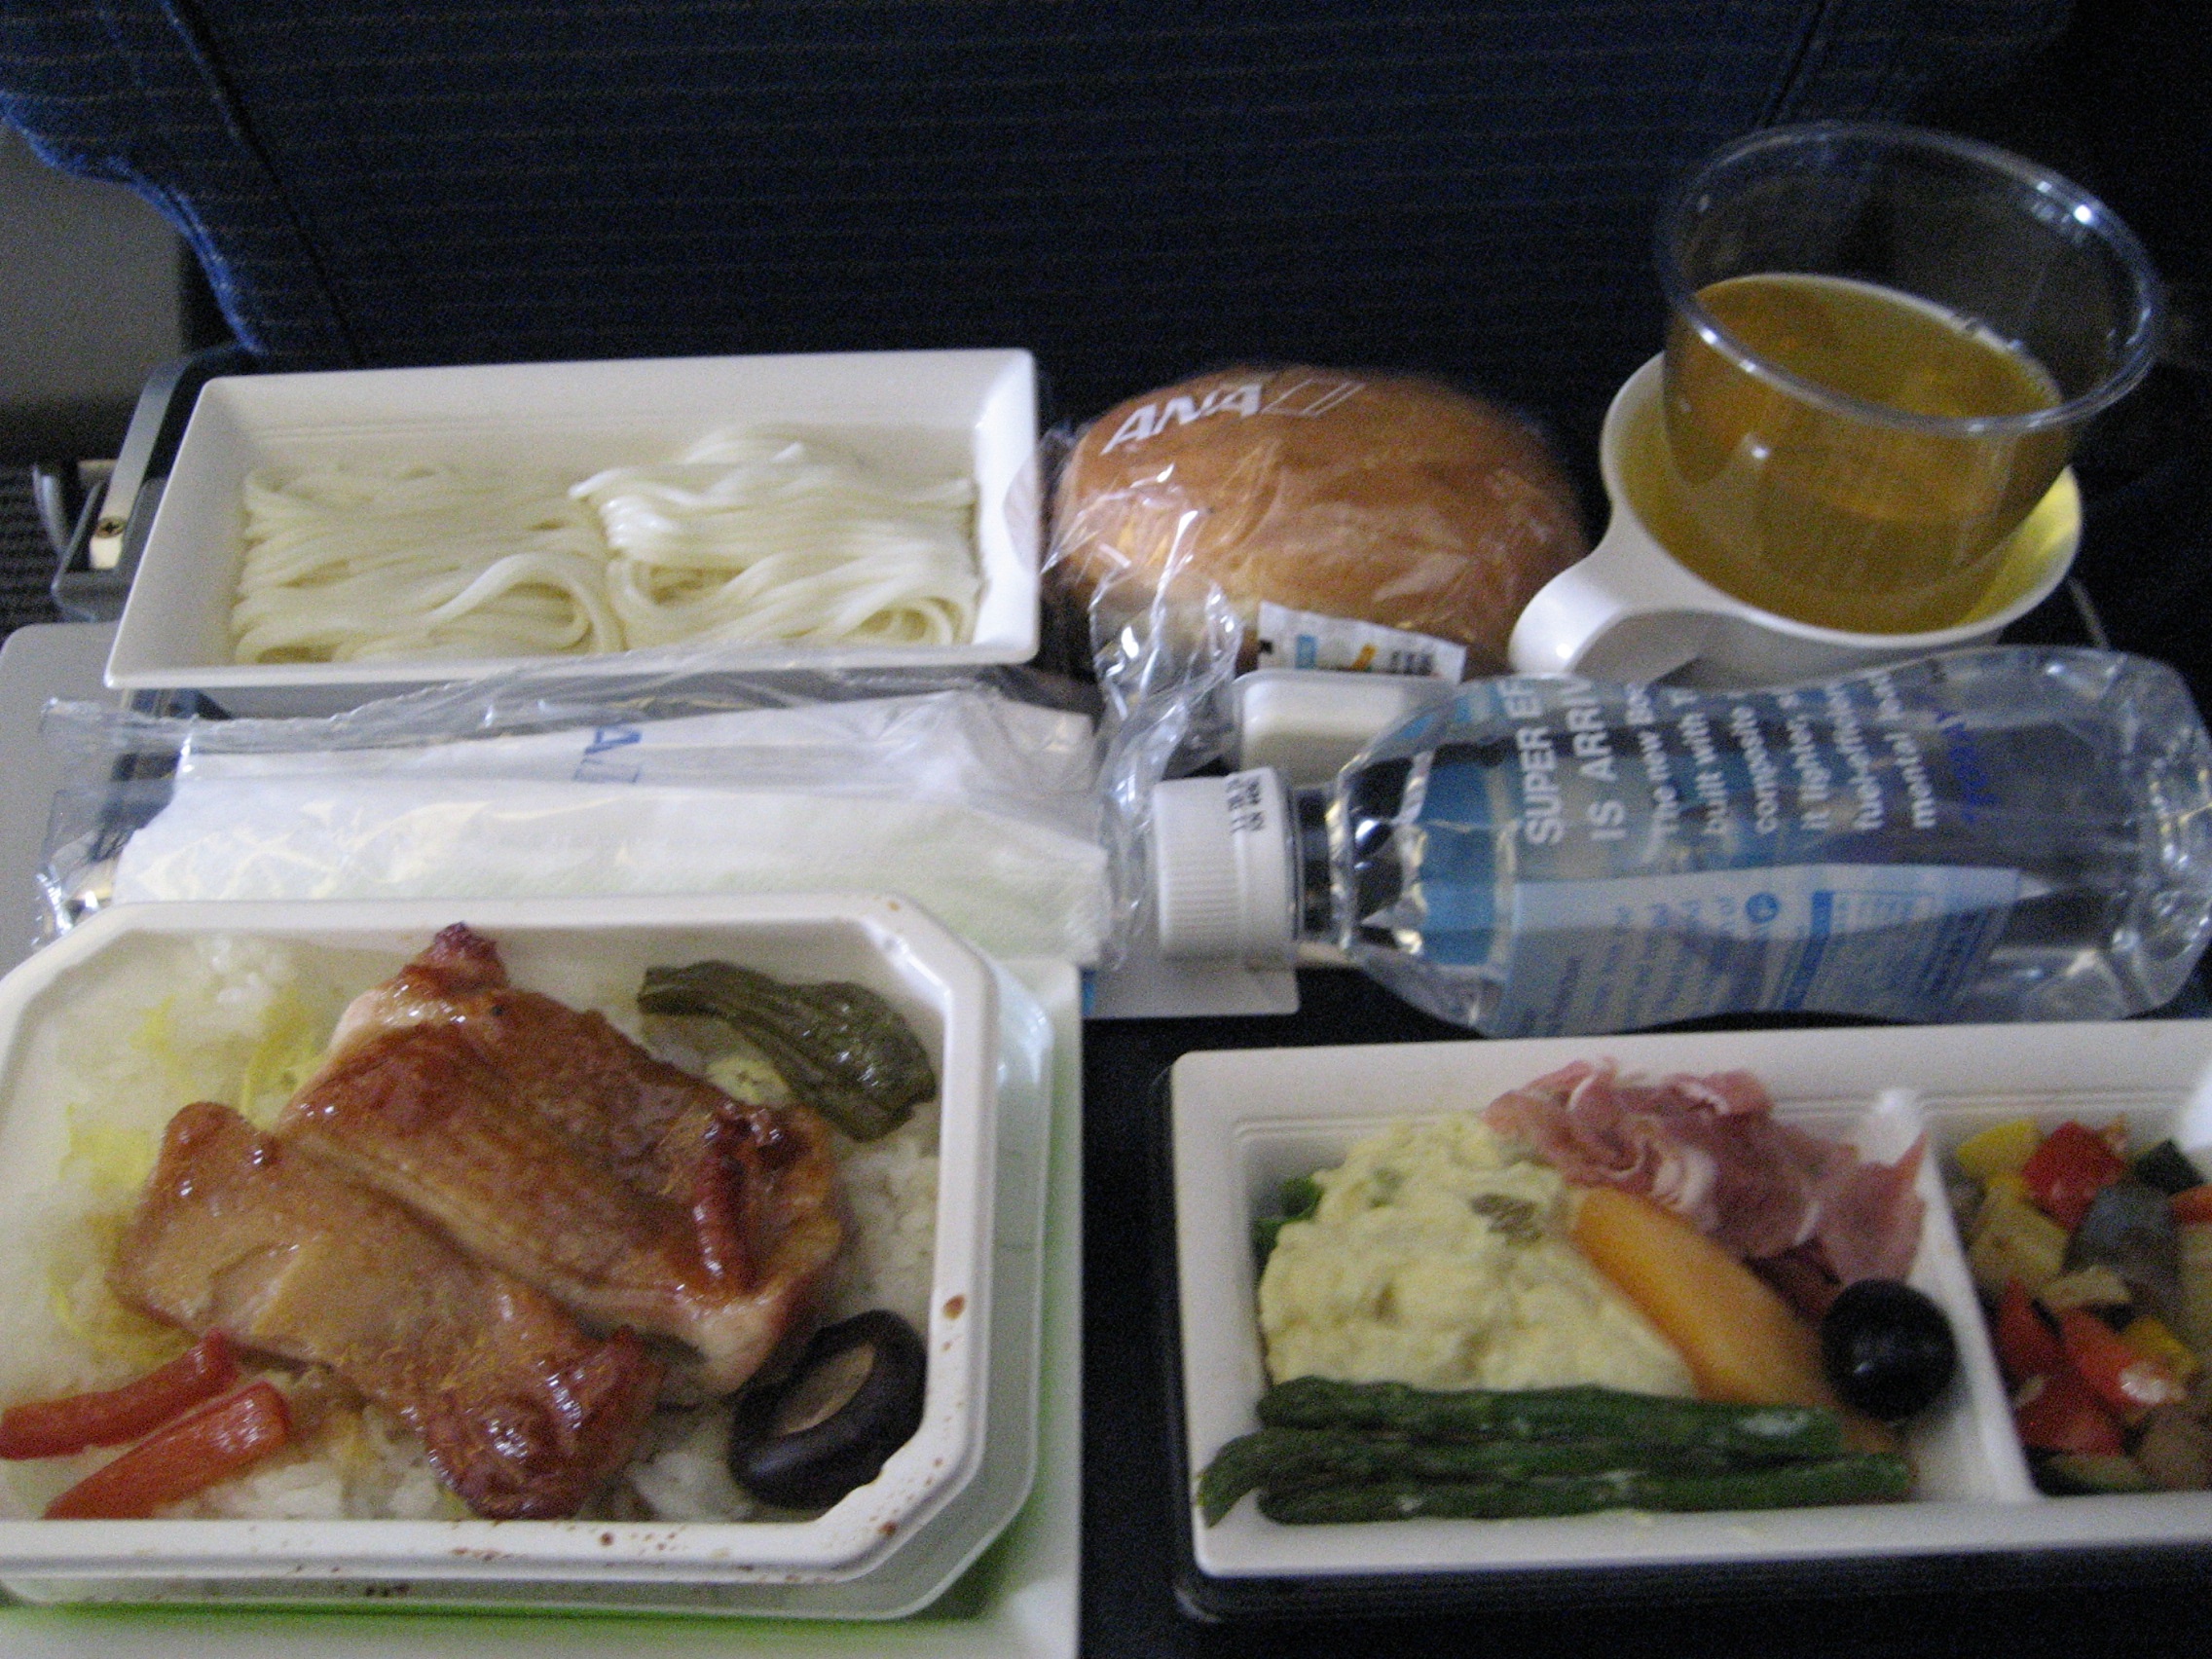 Good airplane food